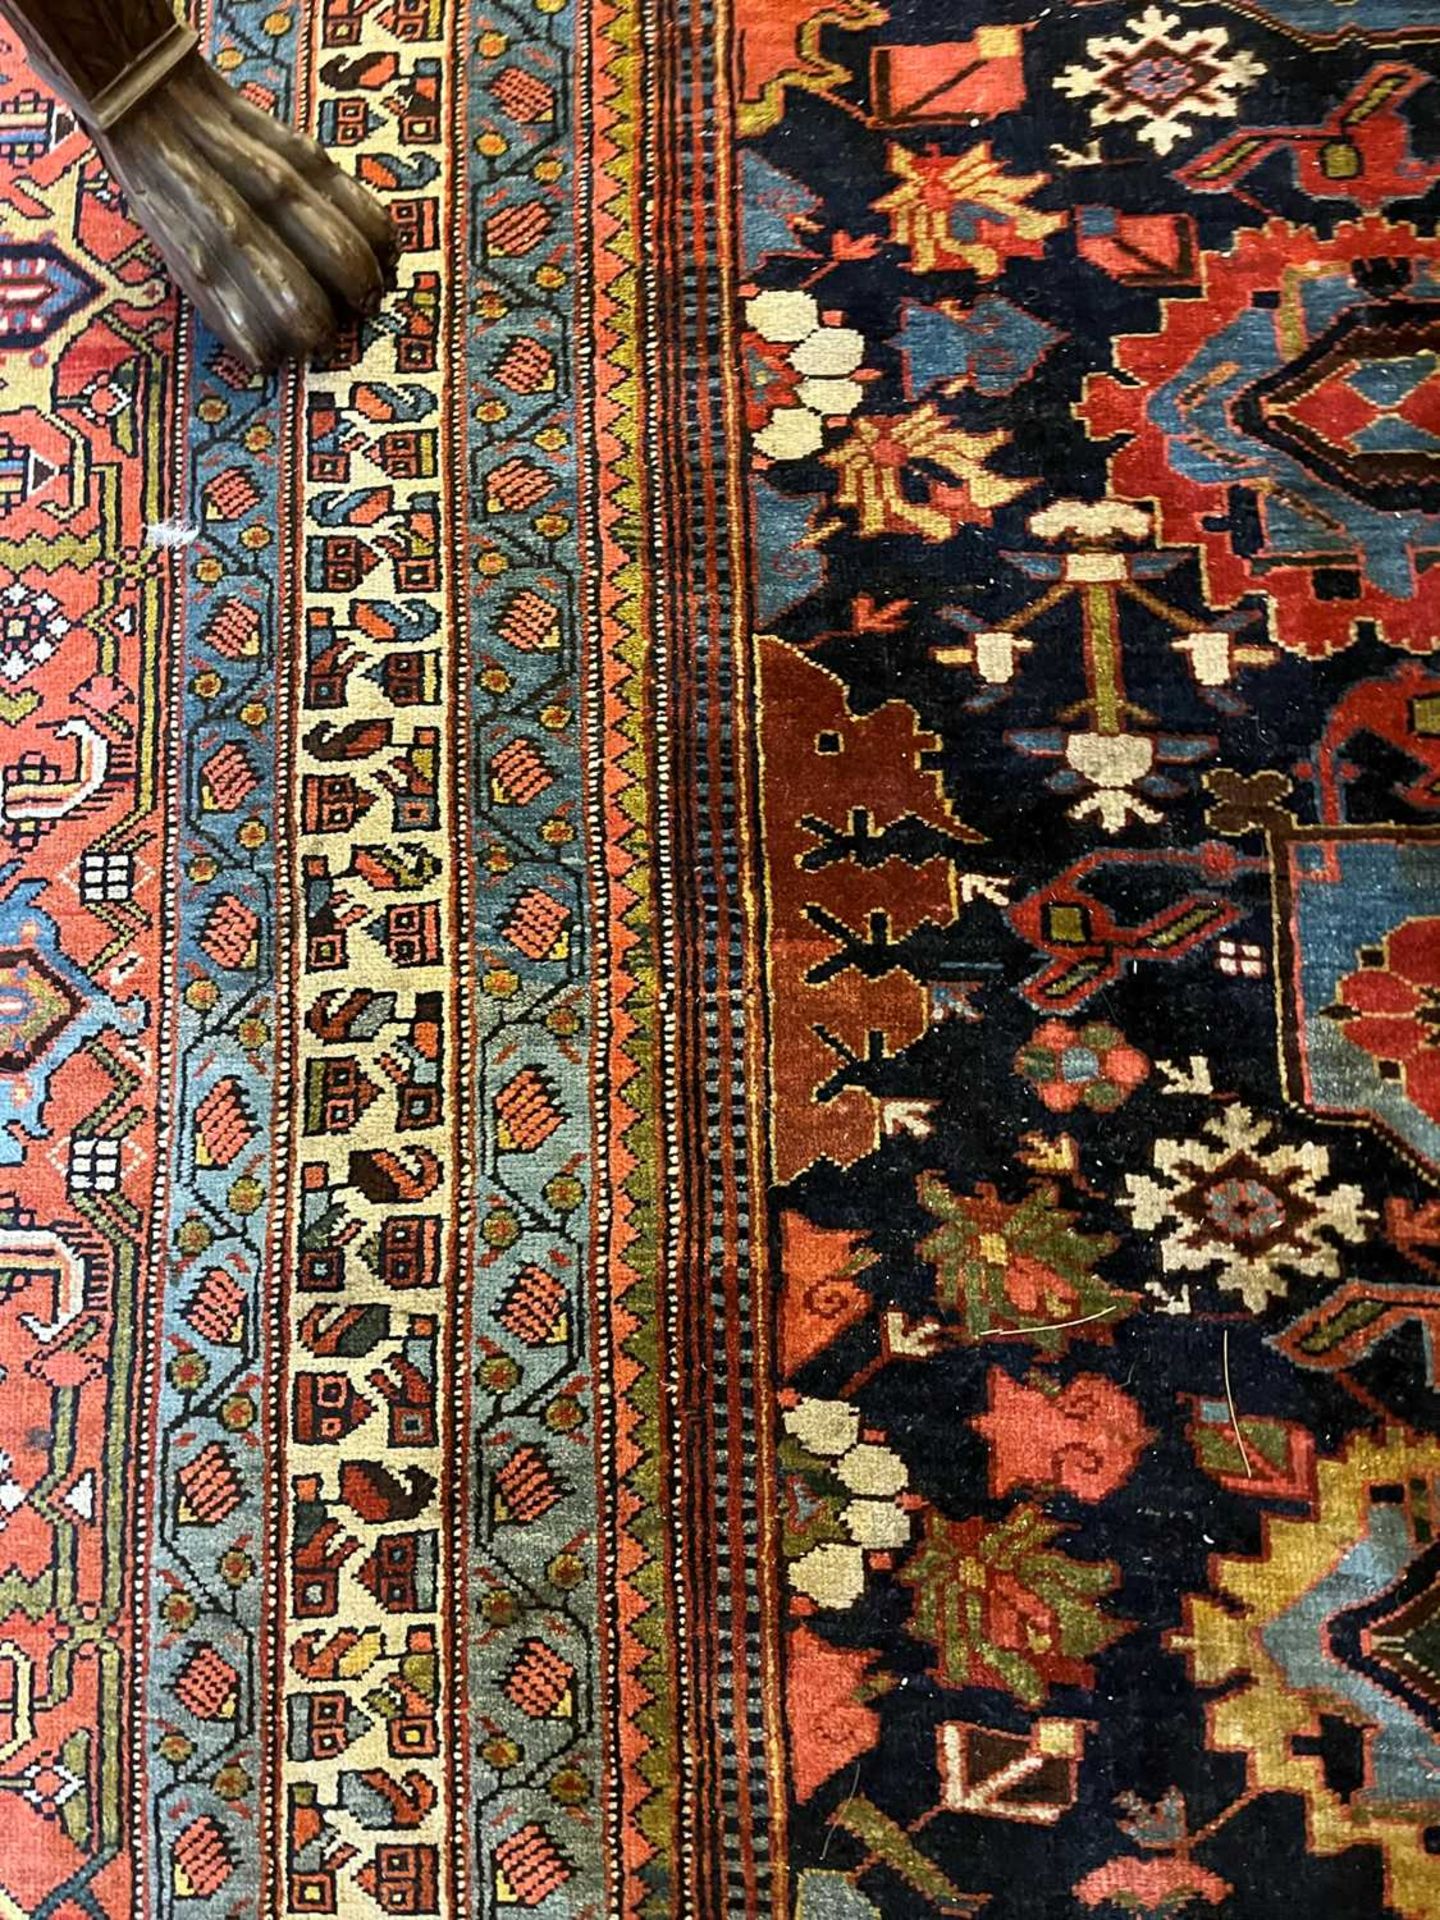 A large Persian wool carpet, - Image 10 of 28